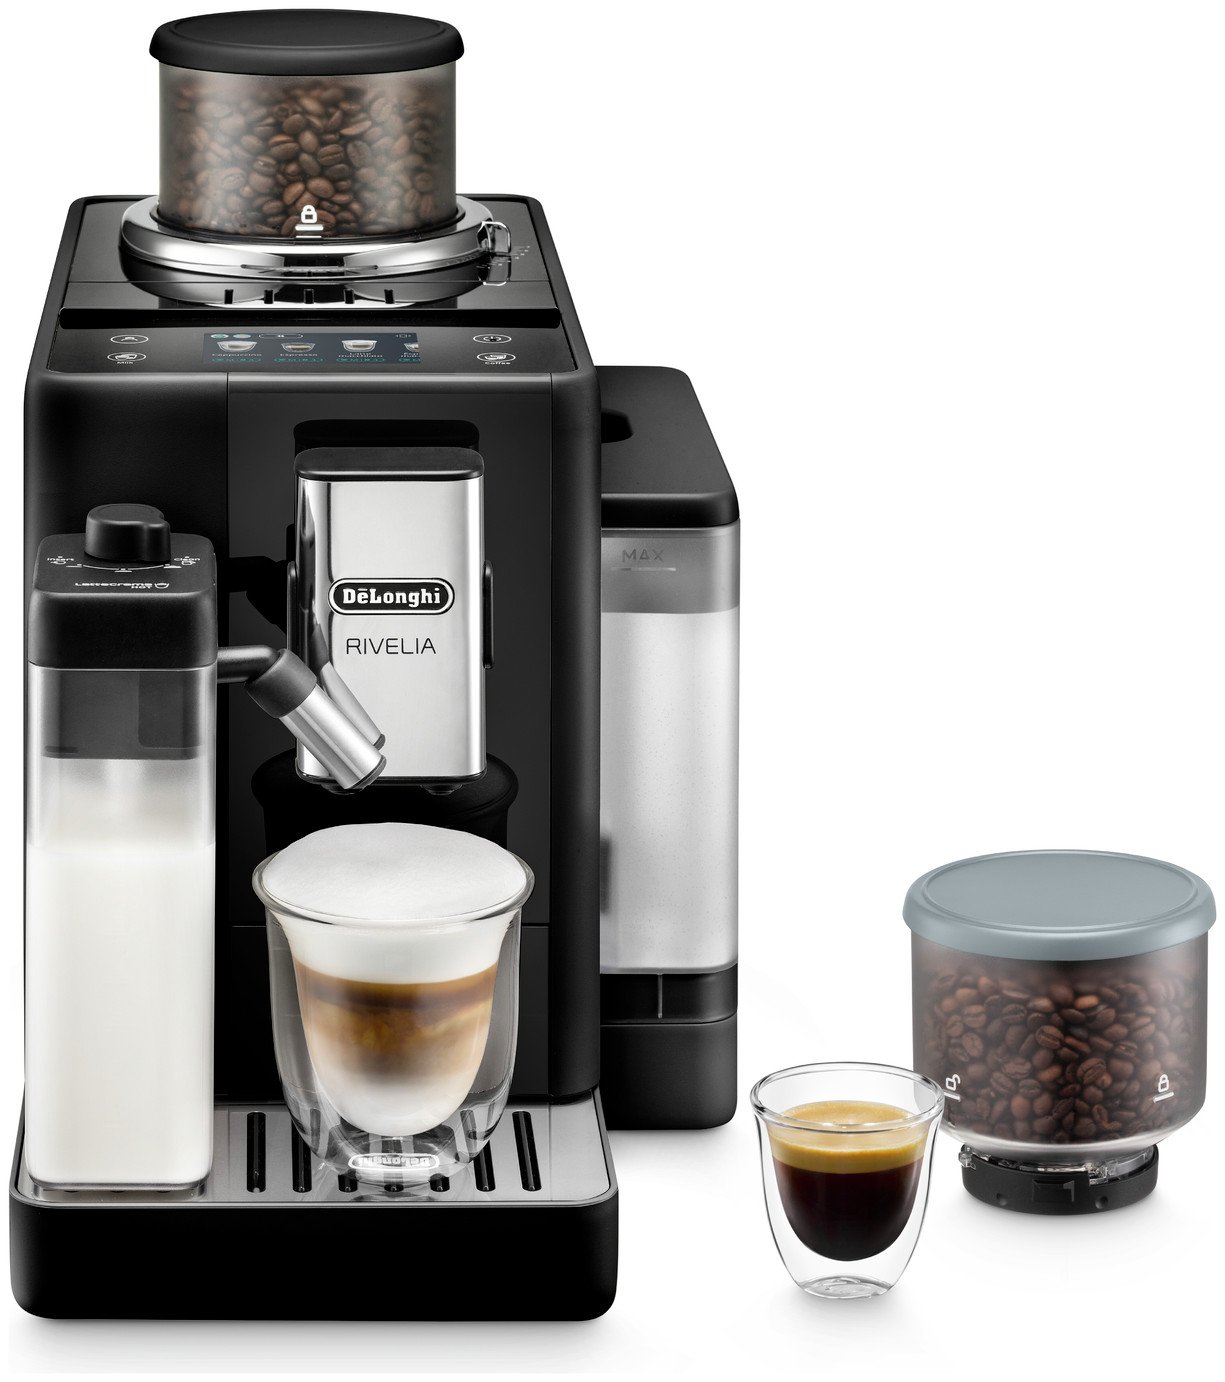 De'Longhi Rivelia Bean to Cup Coffee Machine - Black